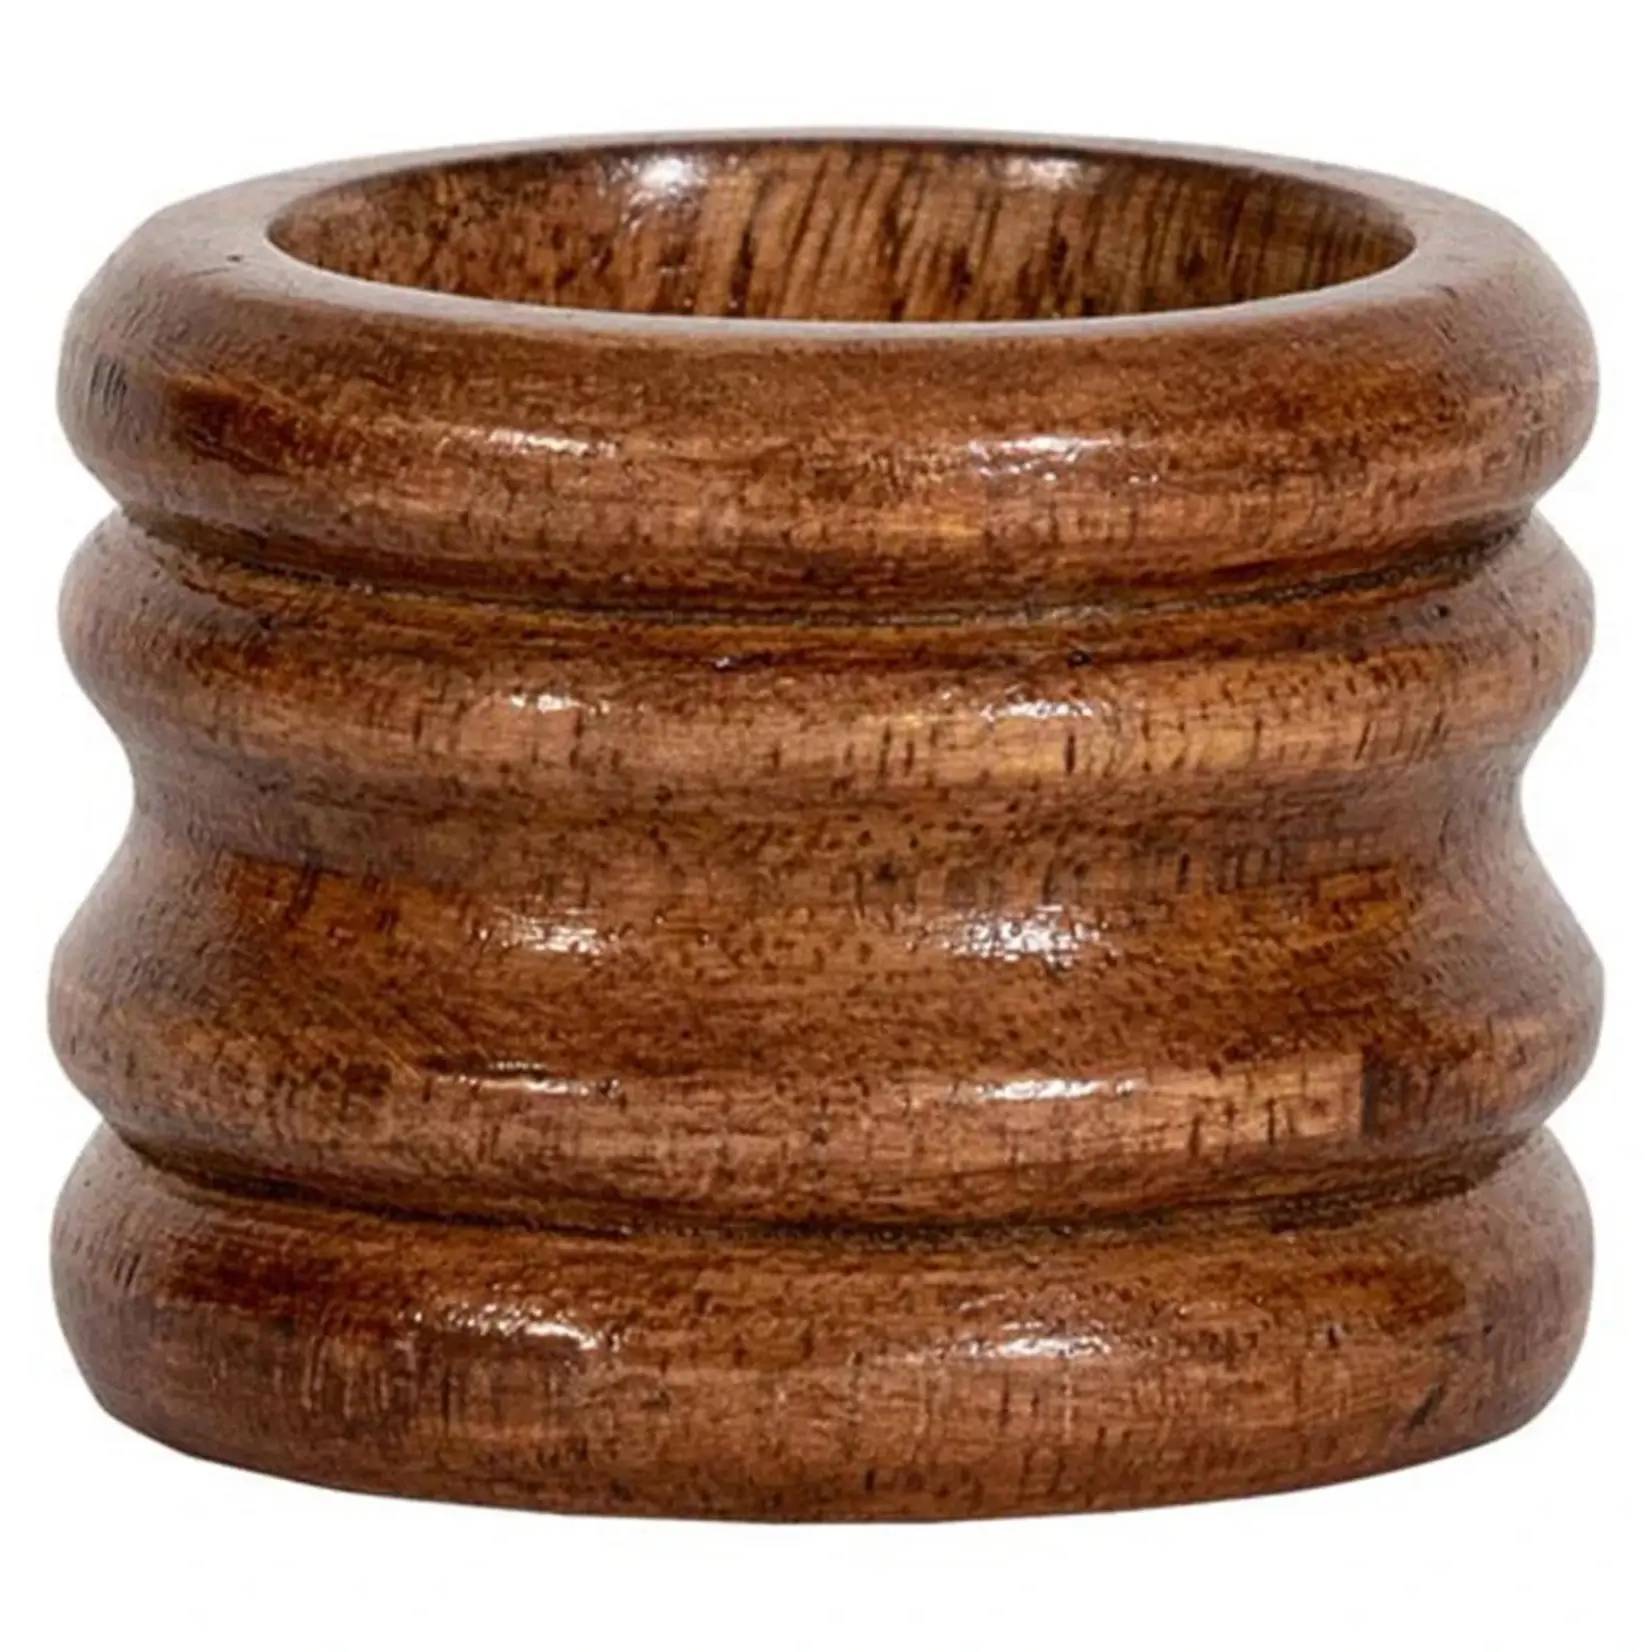 Juliska Bilbao Wood Napkin Ring